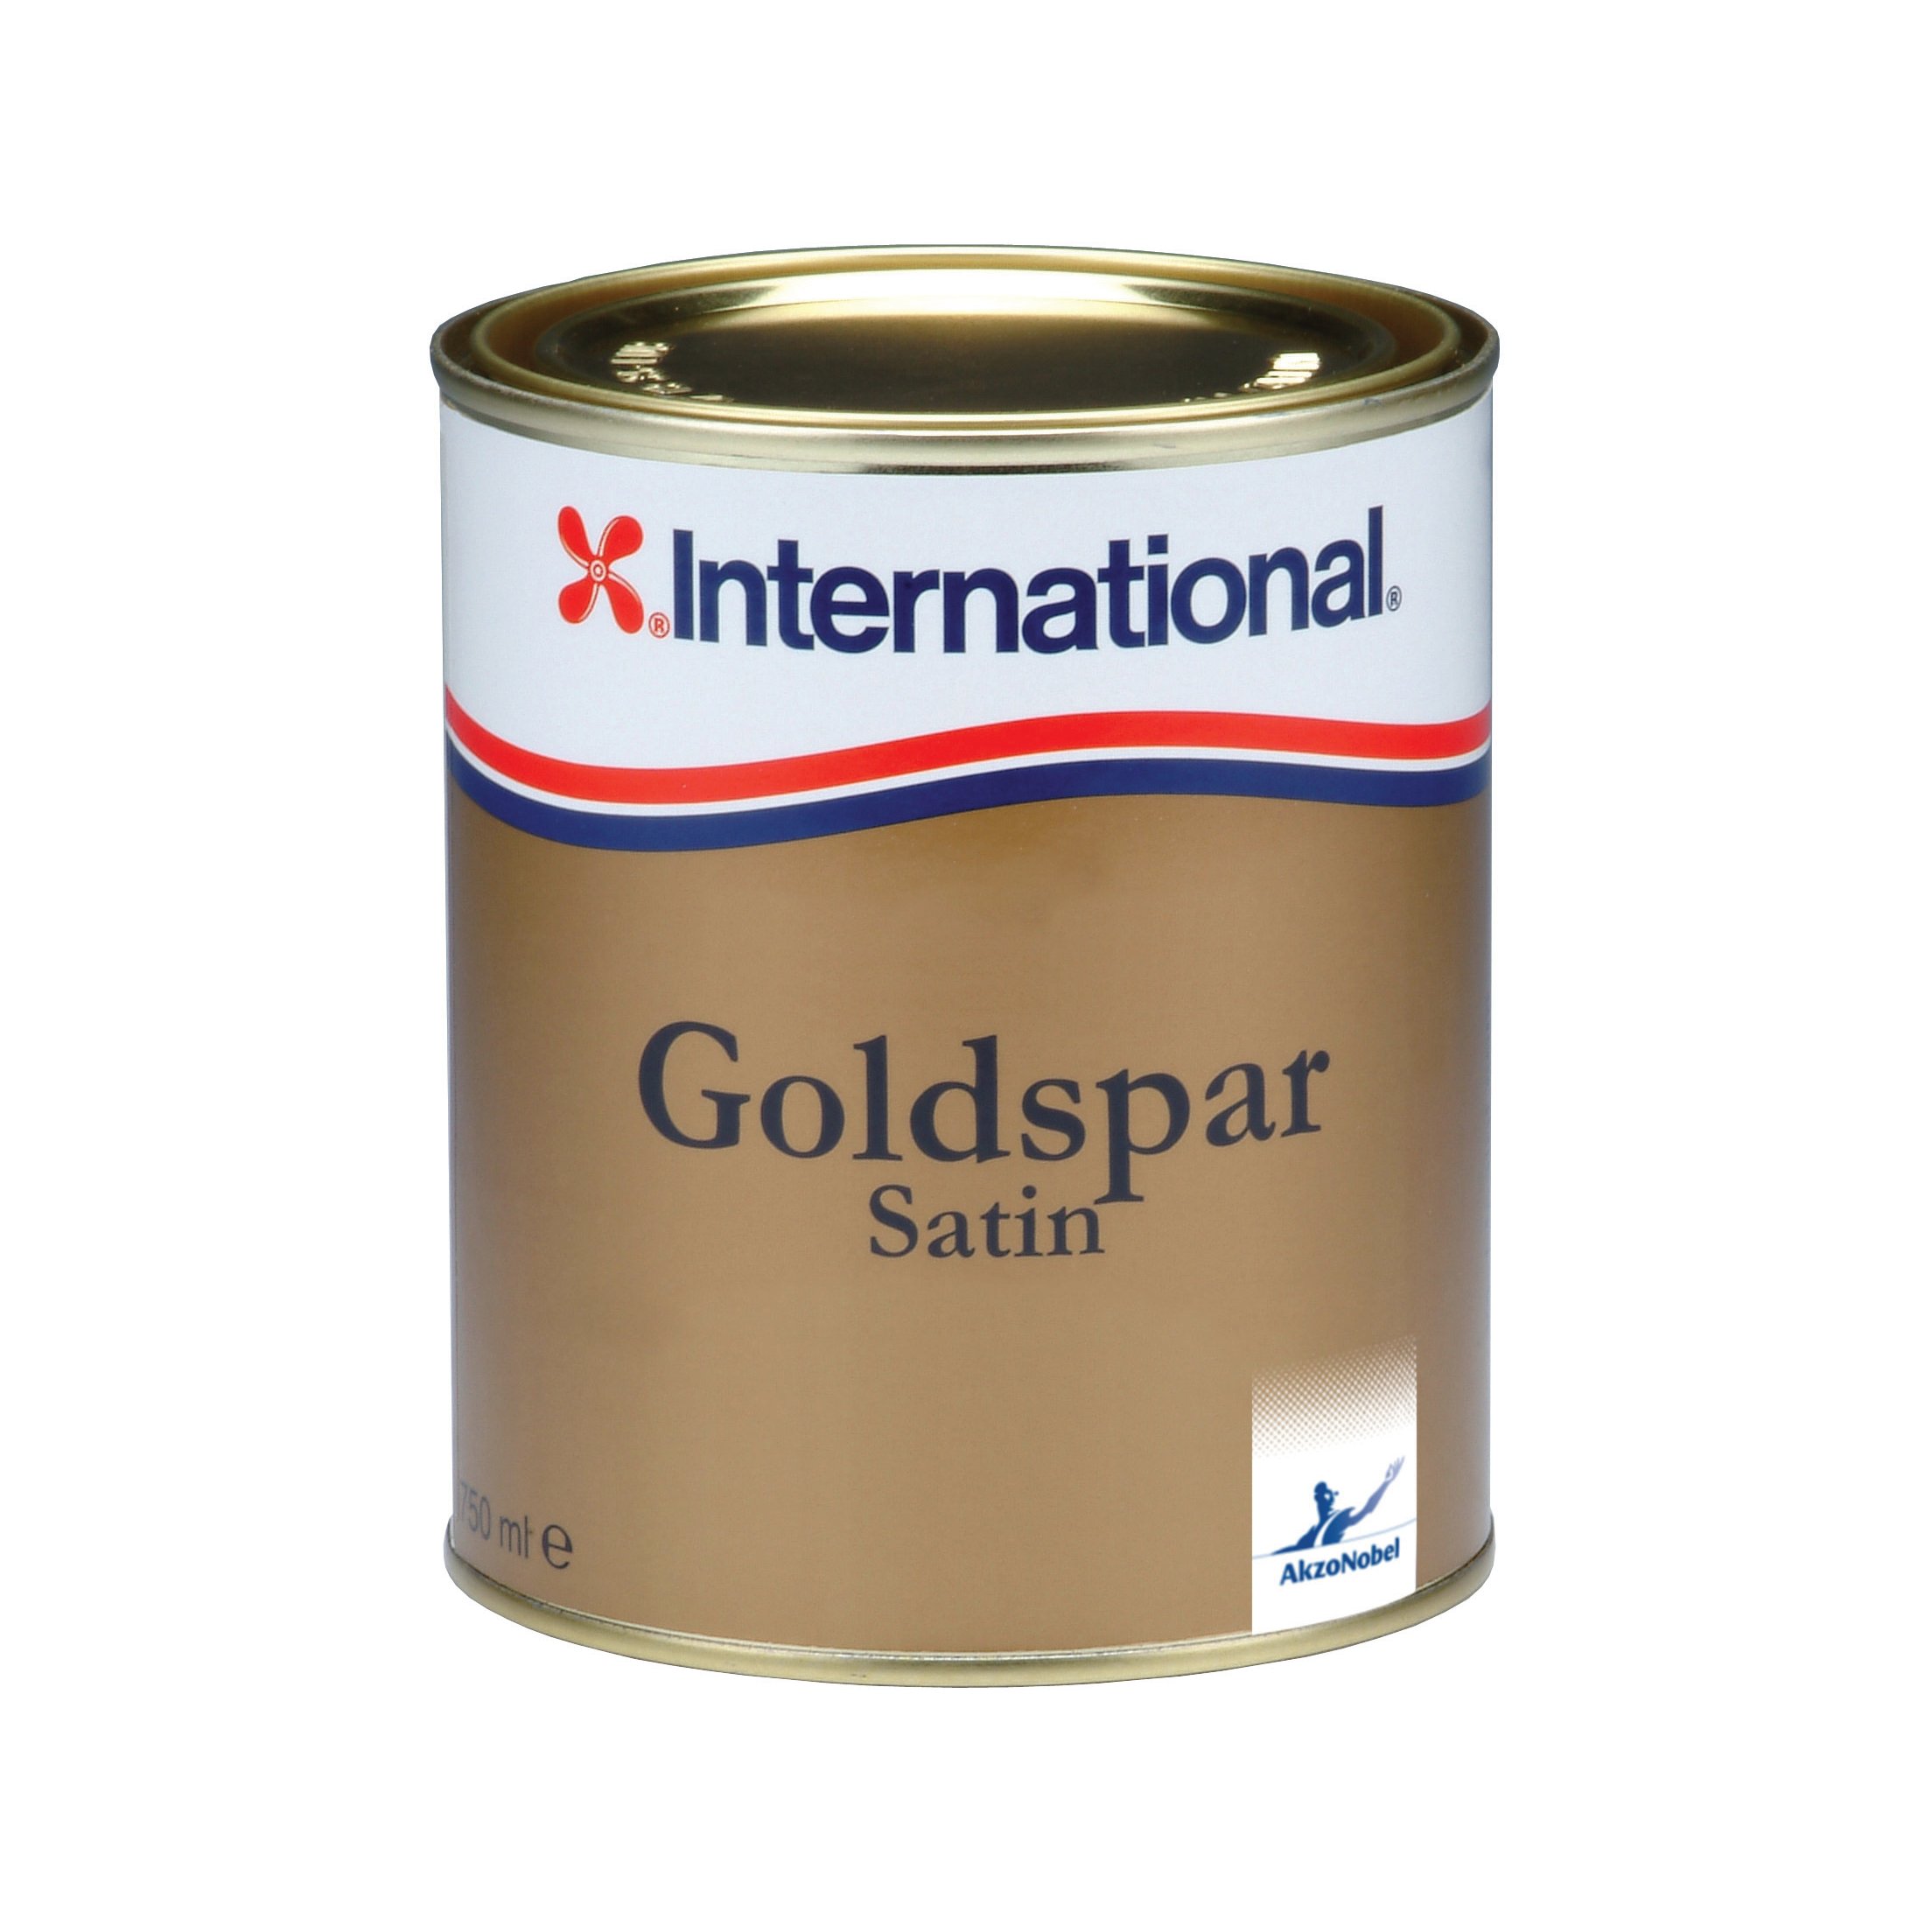 International Goldspar Satin laque transparente - 750ml